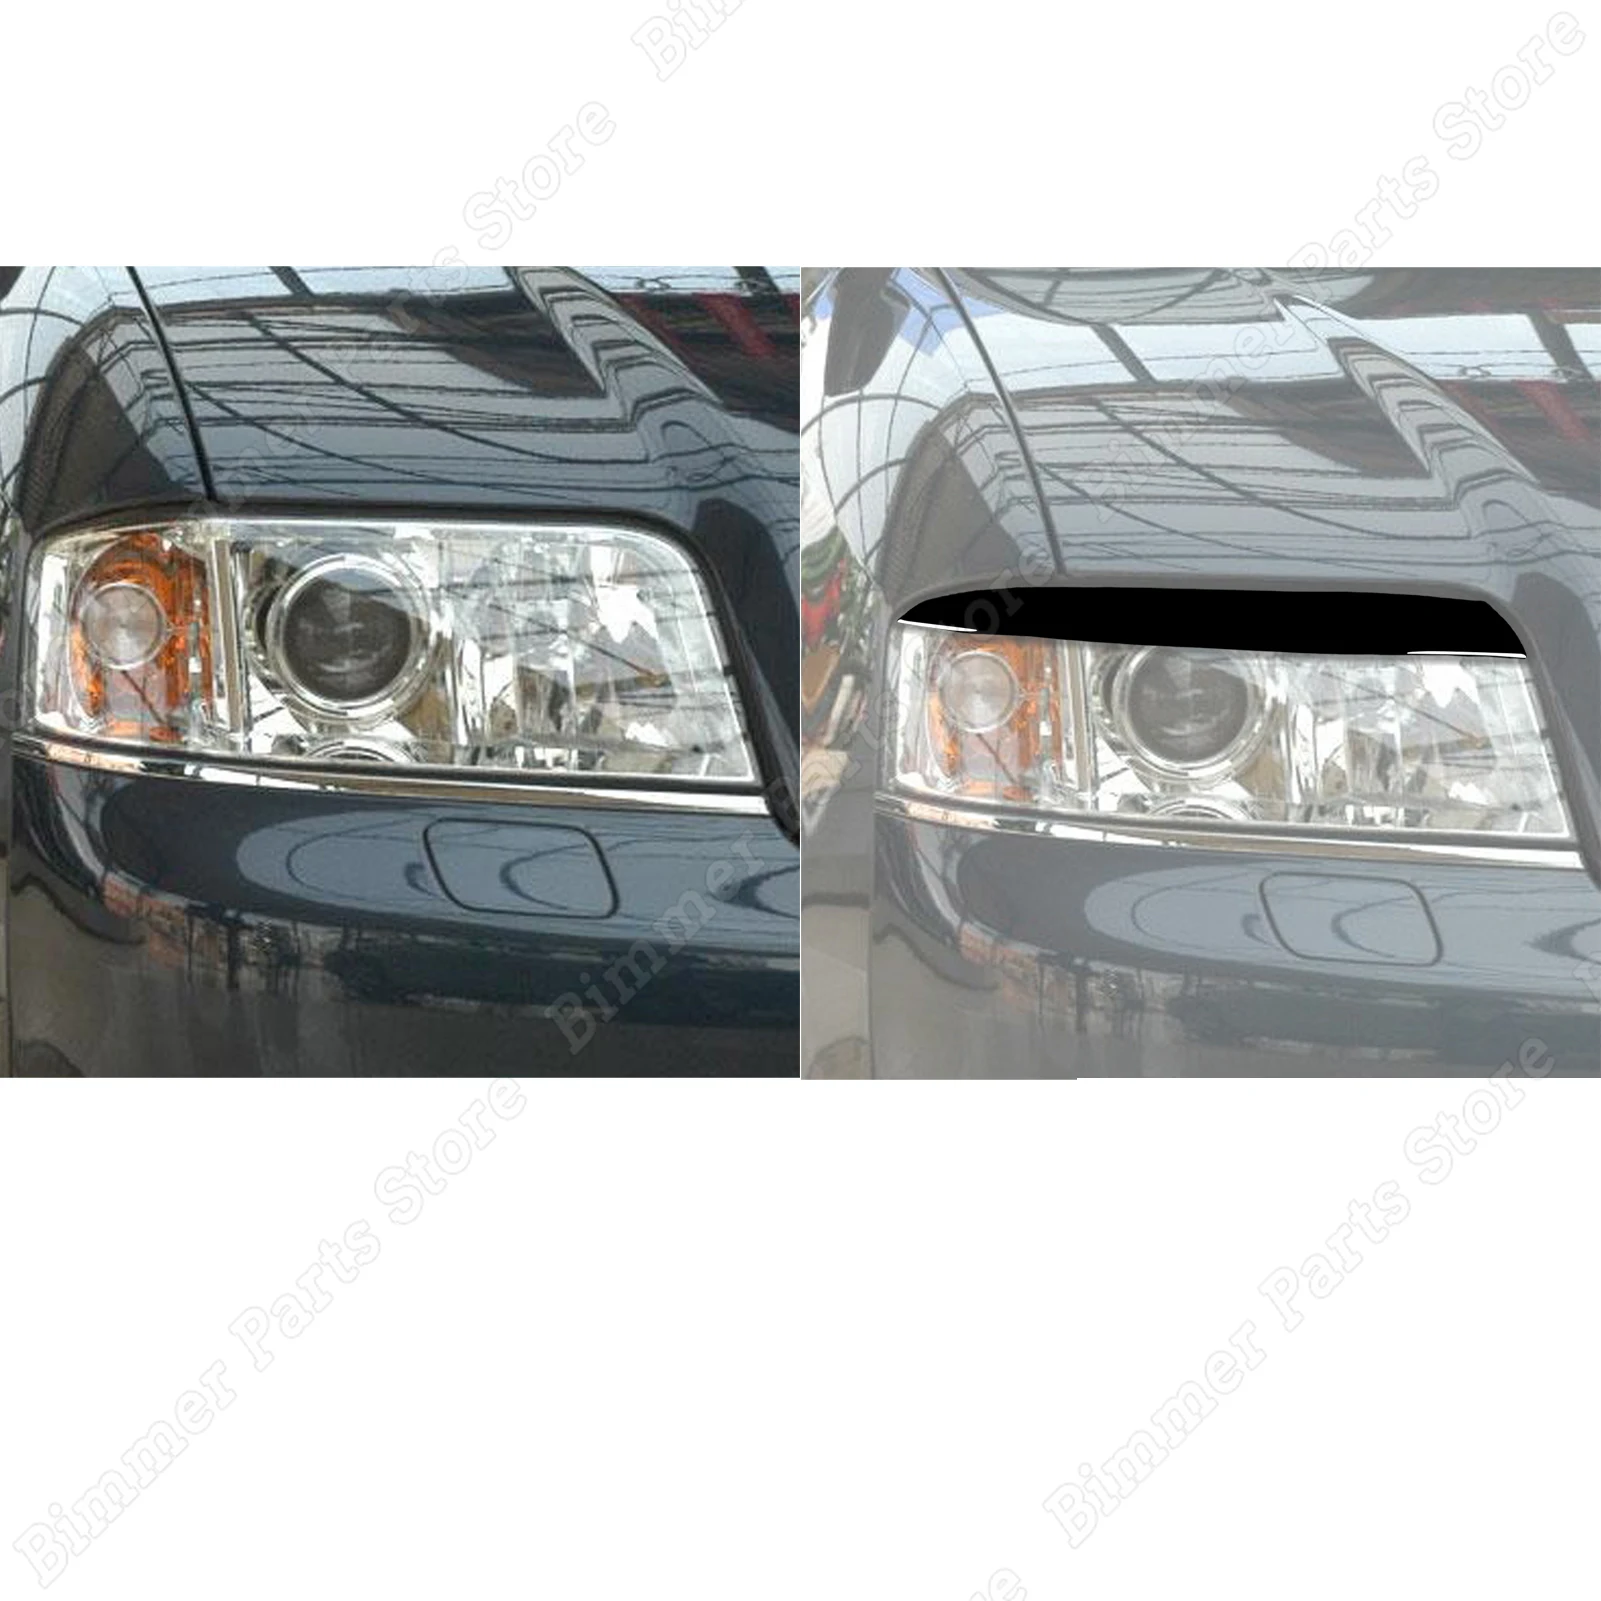 2pcs γυαλιστερό Μαύρο Προβολέων Αυτοκινήτων Φρύδια Βλέφαρο Καλύπτει Περιποίησης Αυτοκόλλητα Για Audi A6 C6 4F 2004 2005 2006 2007 2008 2009 Αξεσουάρ